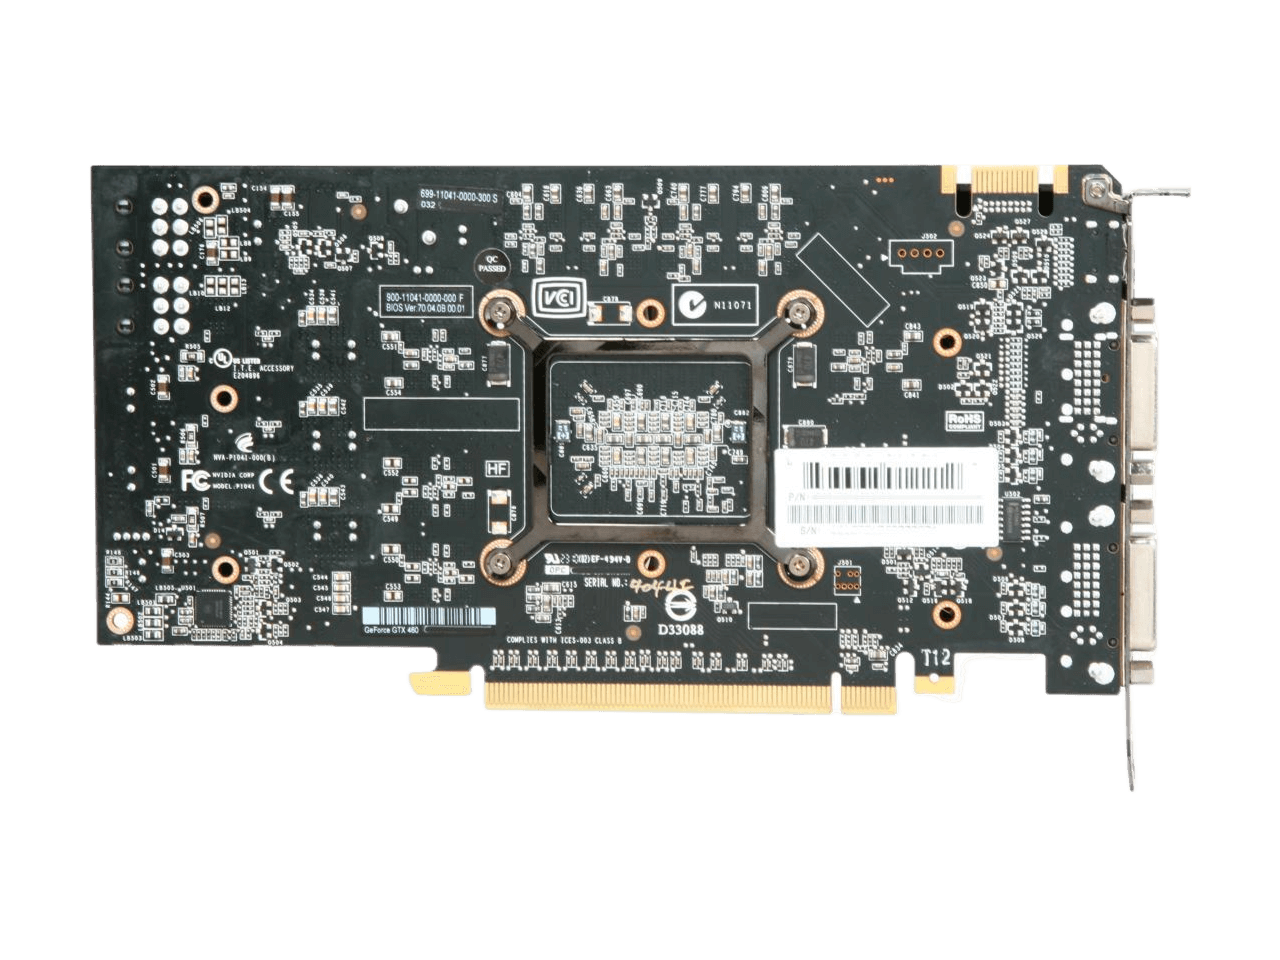 EVGA GeForce GTX 460 (Fermi) Superclocked 768MB 192-bit GDDR5 PCI Express 2.0 x16 HDCP Ready SLI Support Video Card  768-P3-1362-TR